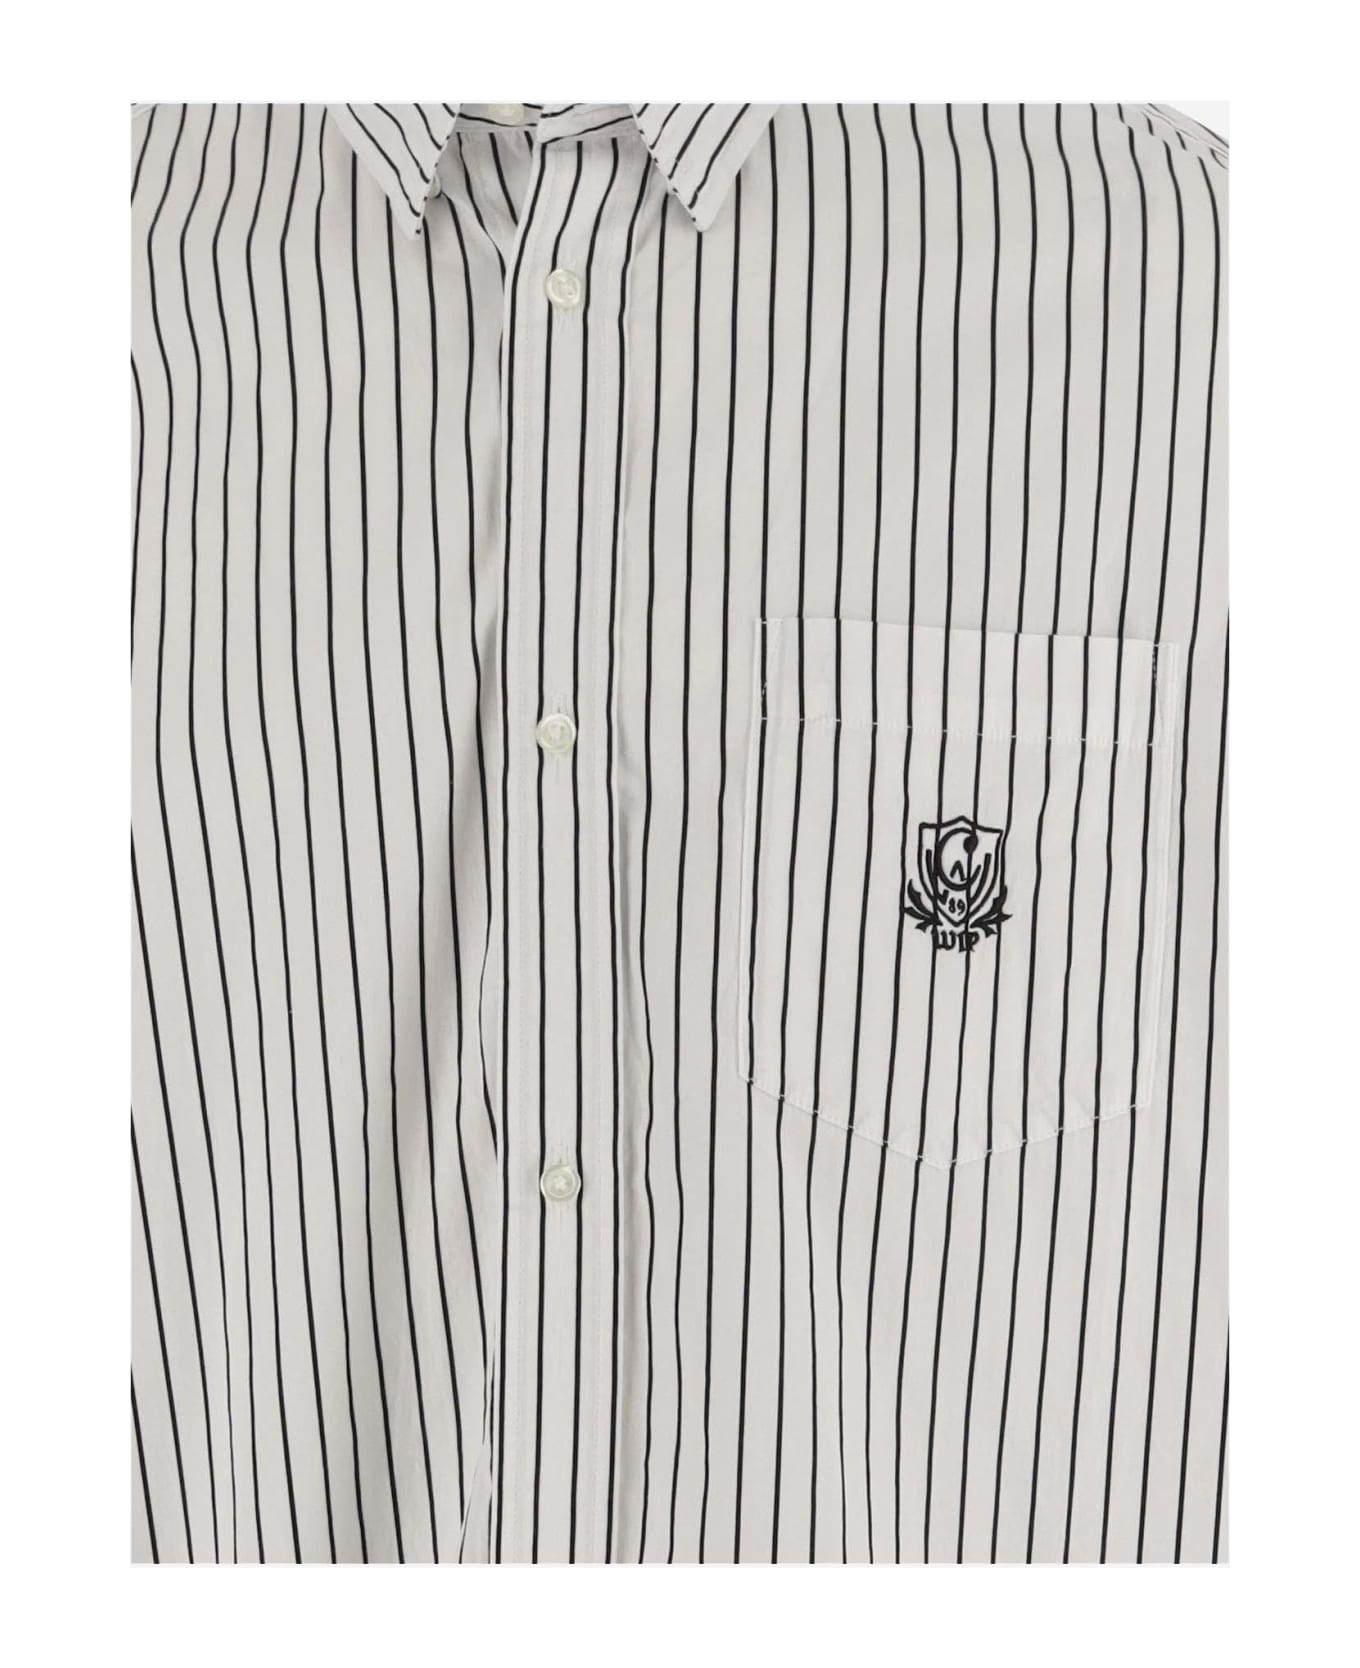 Carhartt Cotton Shirt With Striped Pattern - Bianco